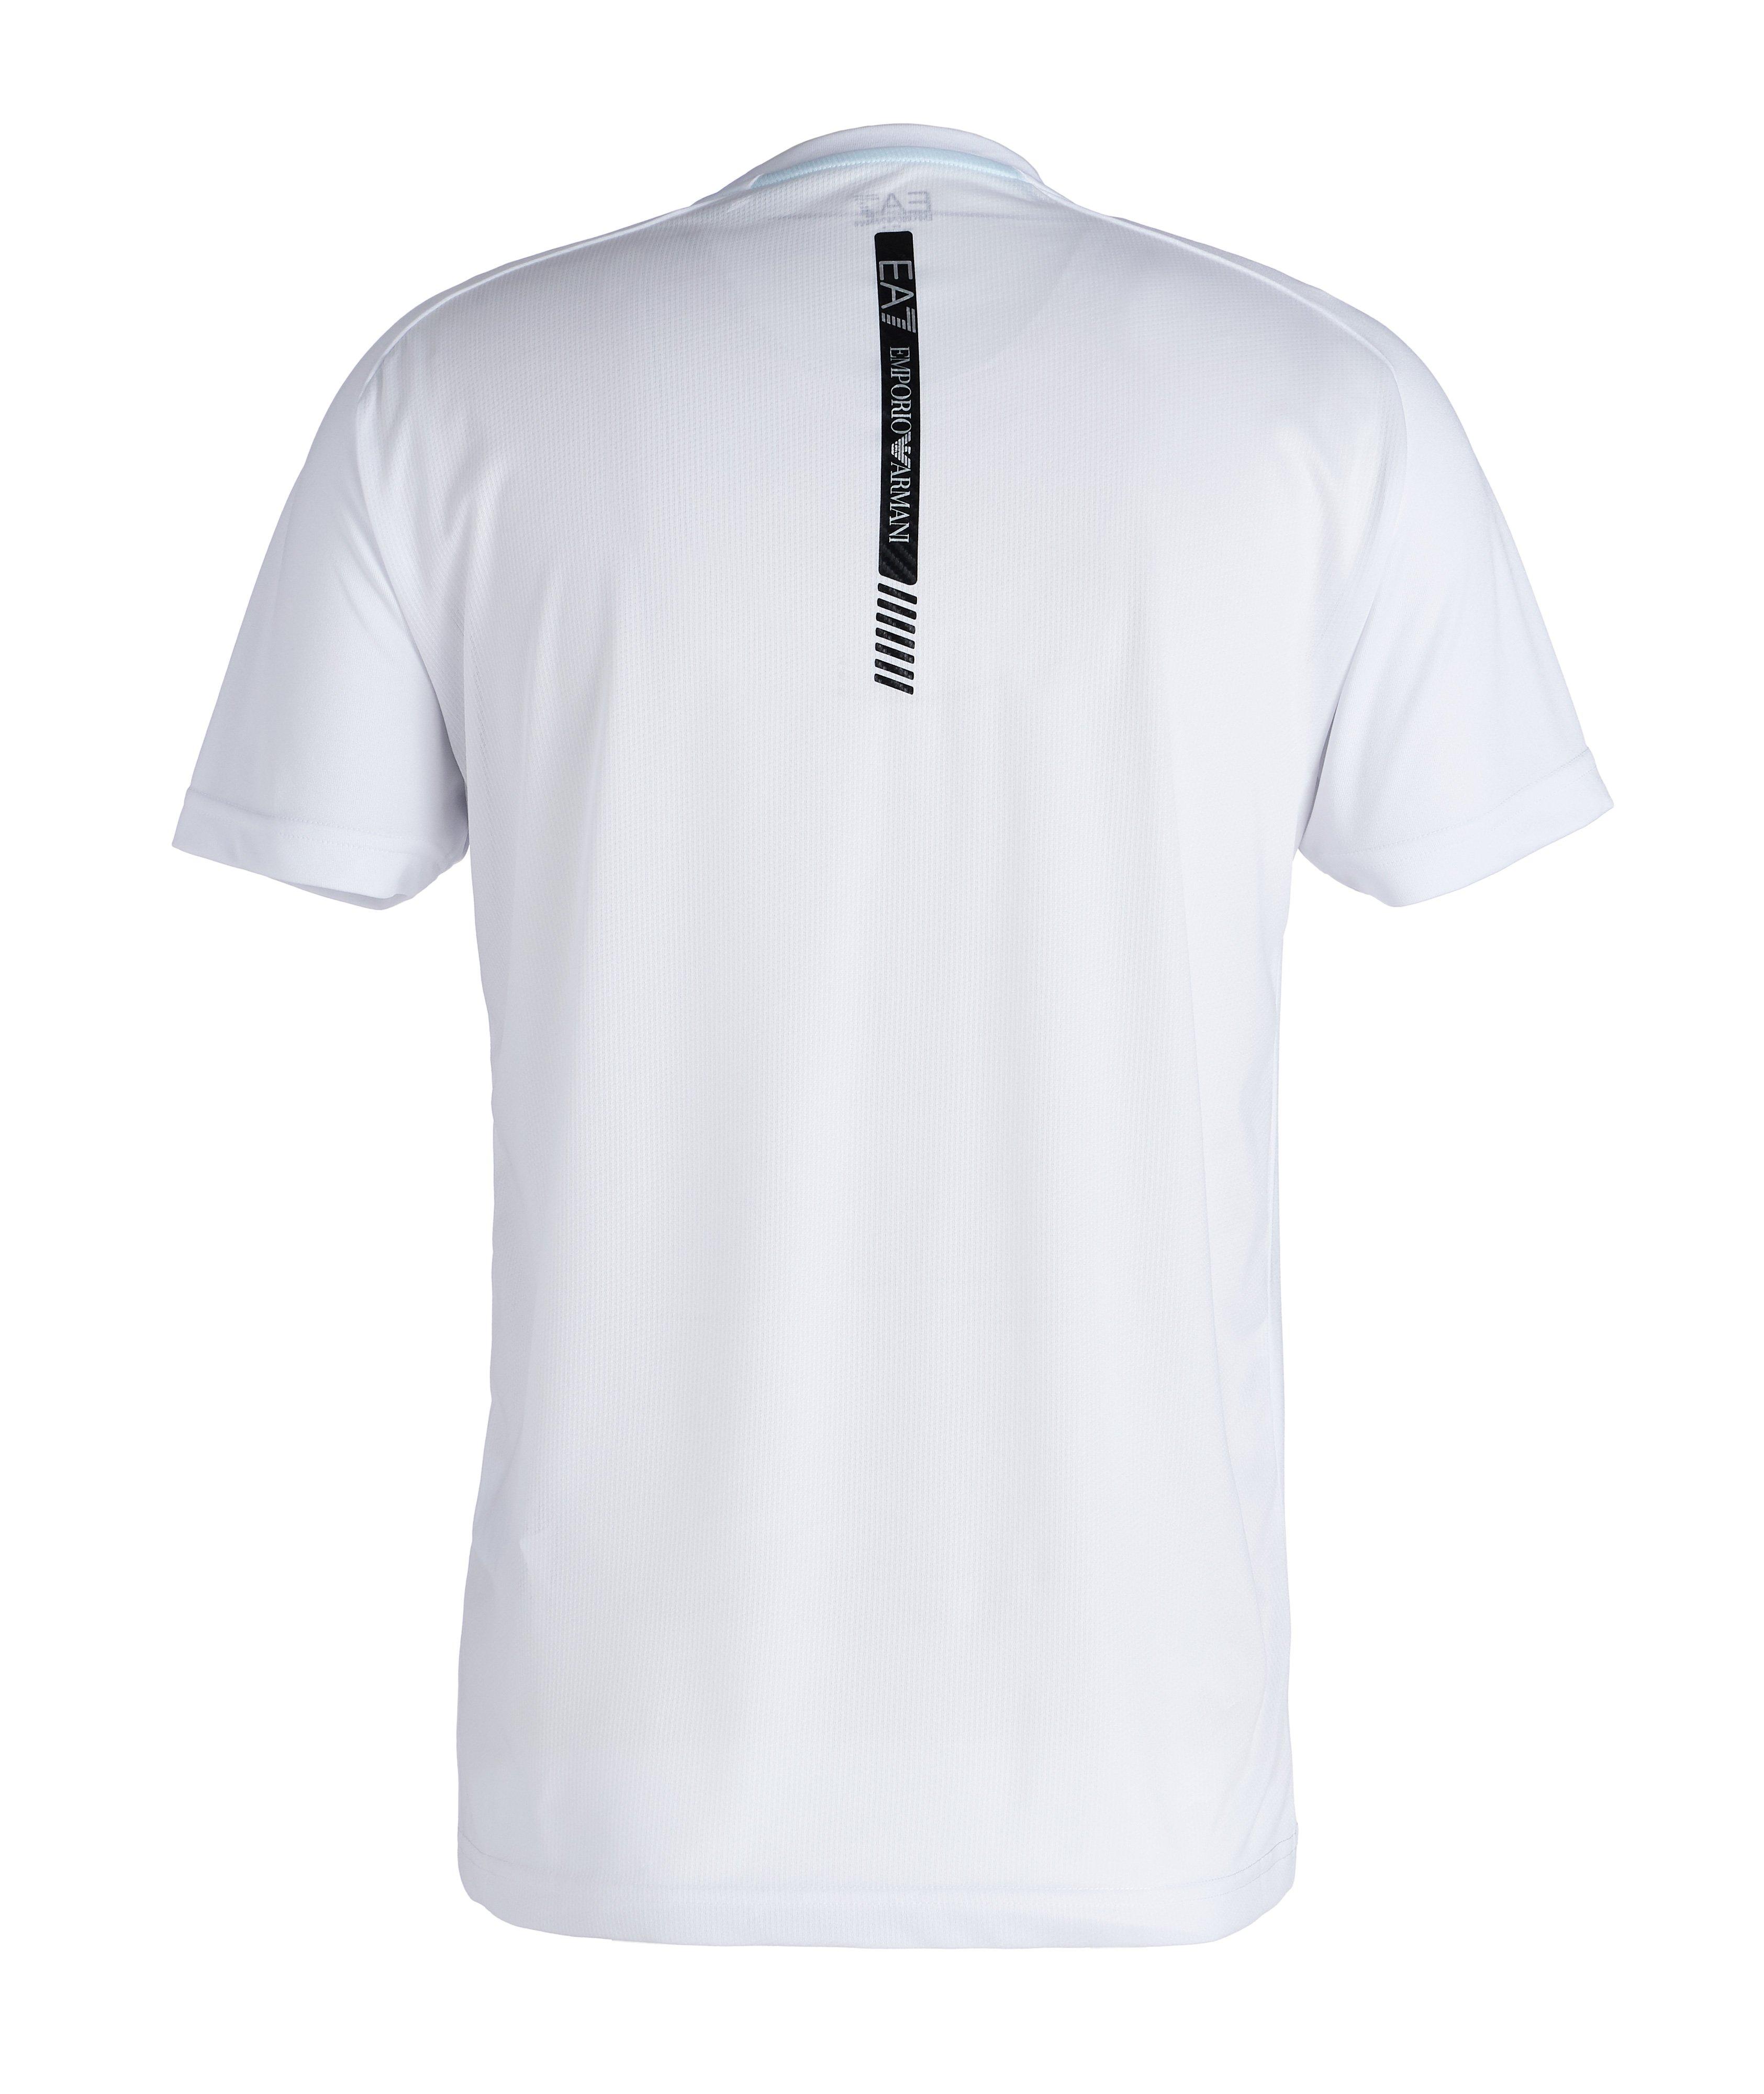 EA7 Logo Stretch T-Shirt image 1